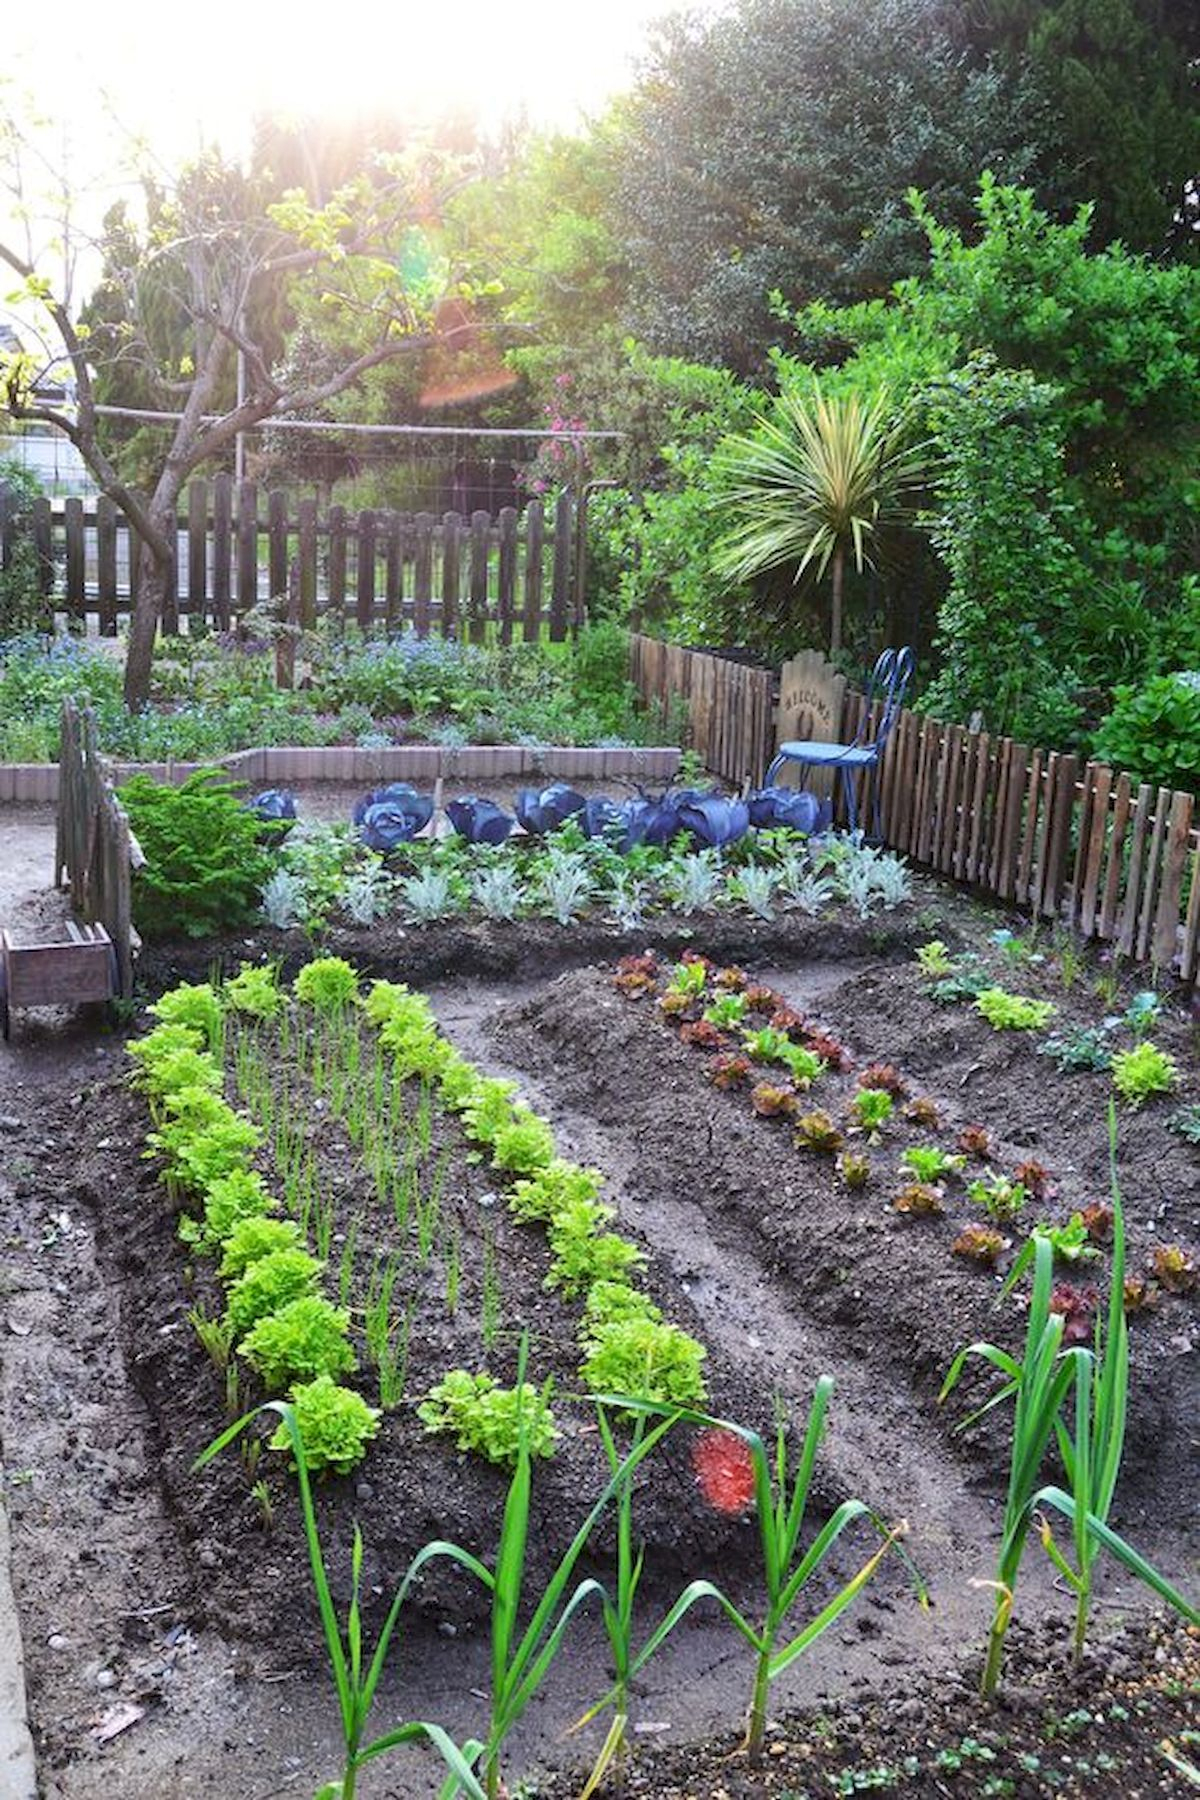  vege garden design ideas